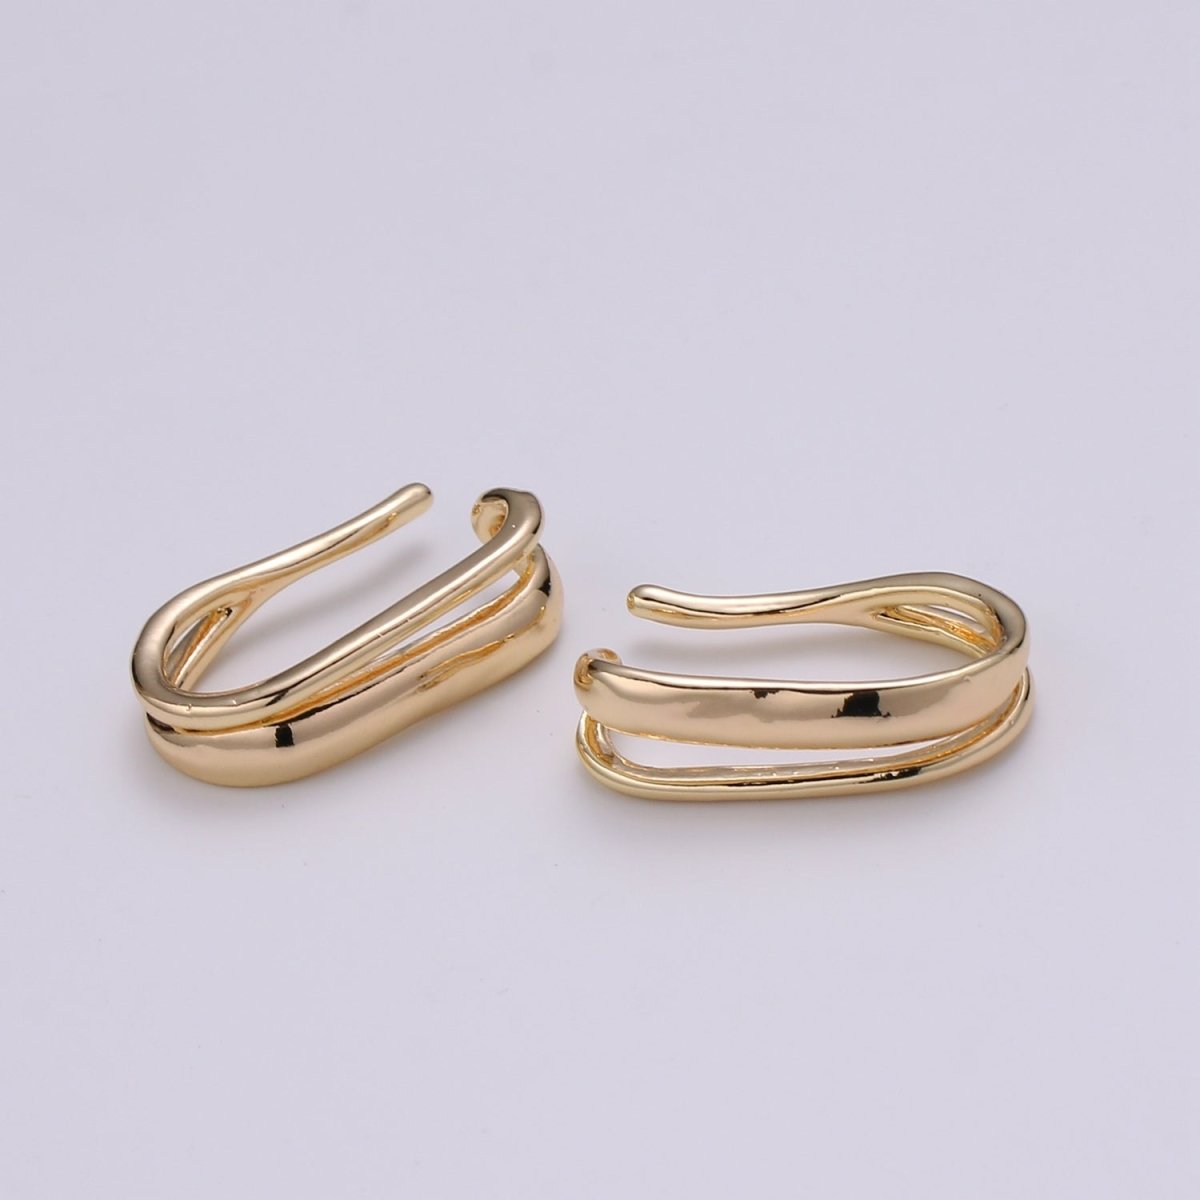 1Pair 18K gold Non Pierced Earring, Double Curb Earring, Earcuff for Cartilage, Simplicity Earring, Minimalist ear cuff, EARR-1397 Q-419 - DLUXCA